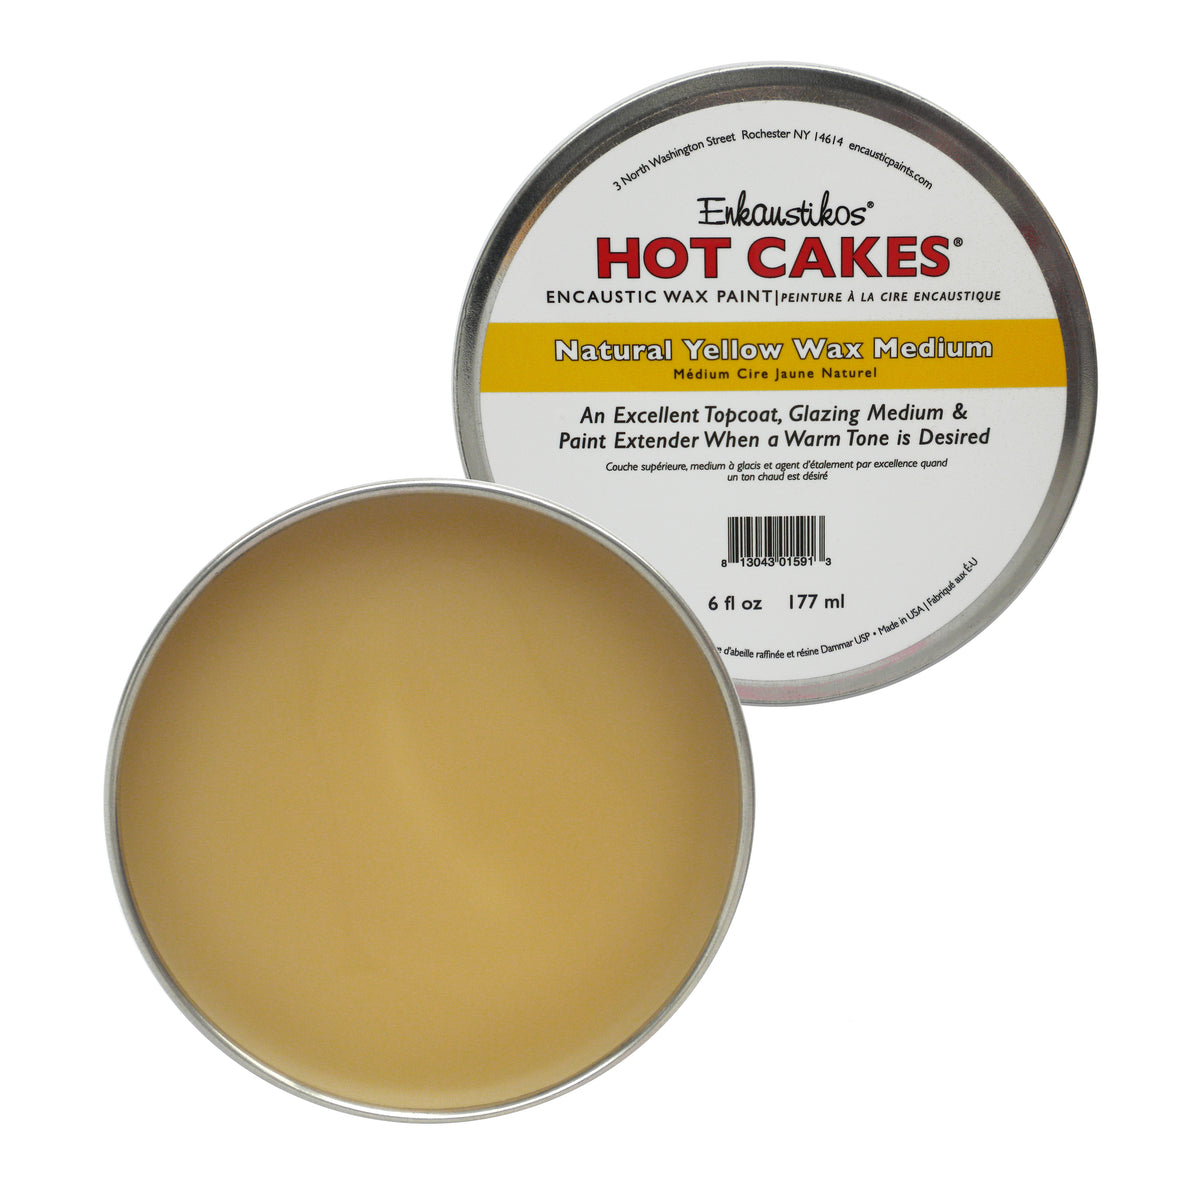 Natural Yellow Wax Medium 6 oz Hot Cakes